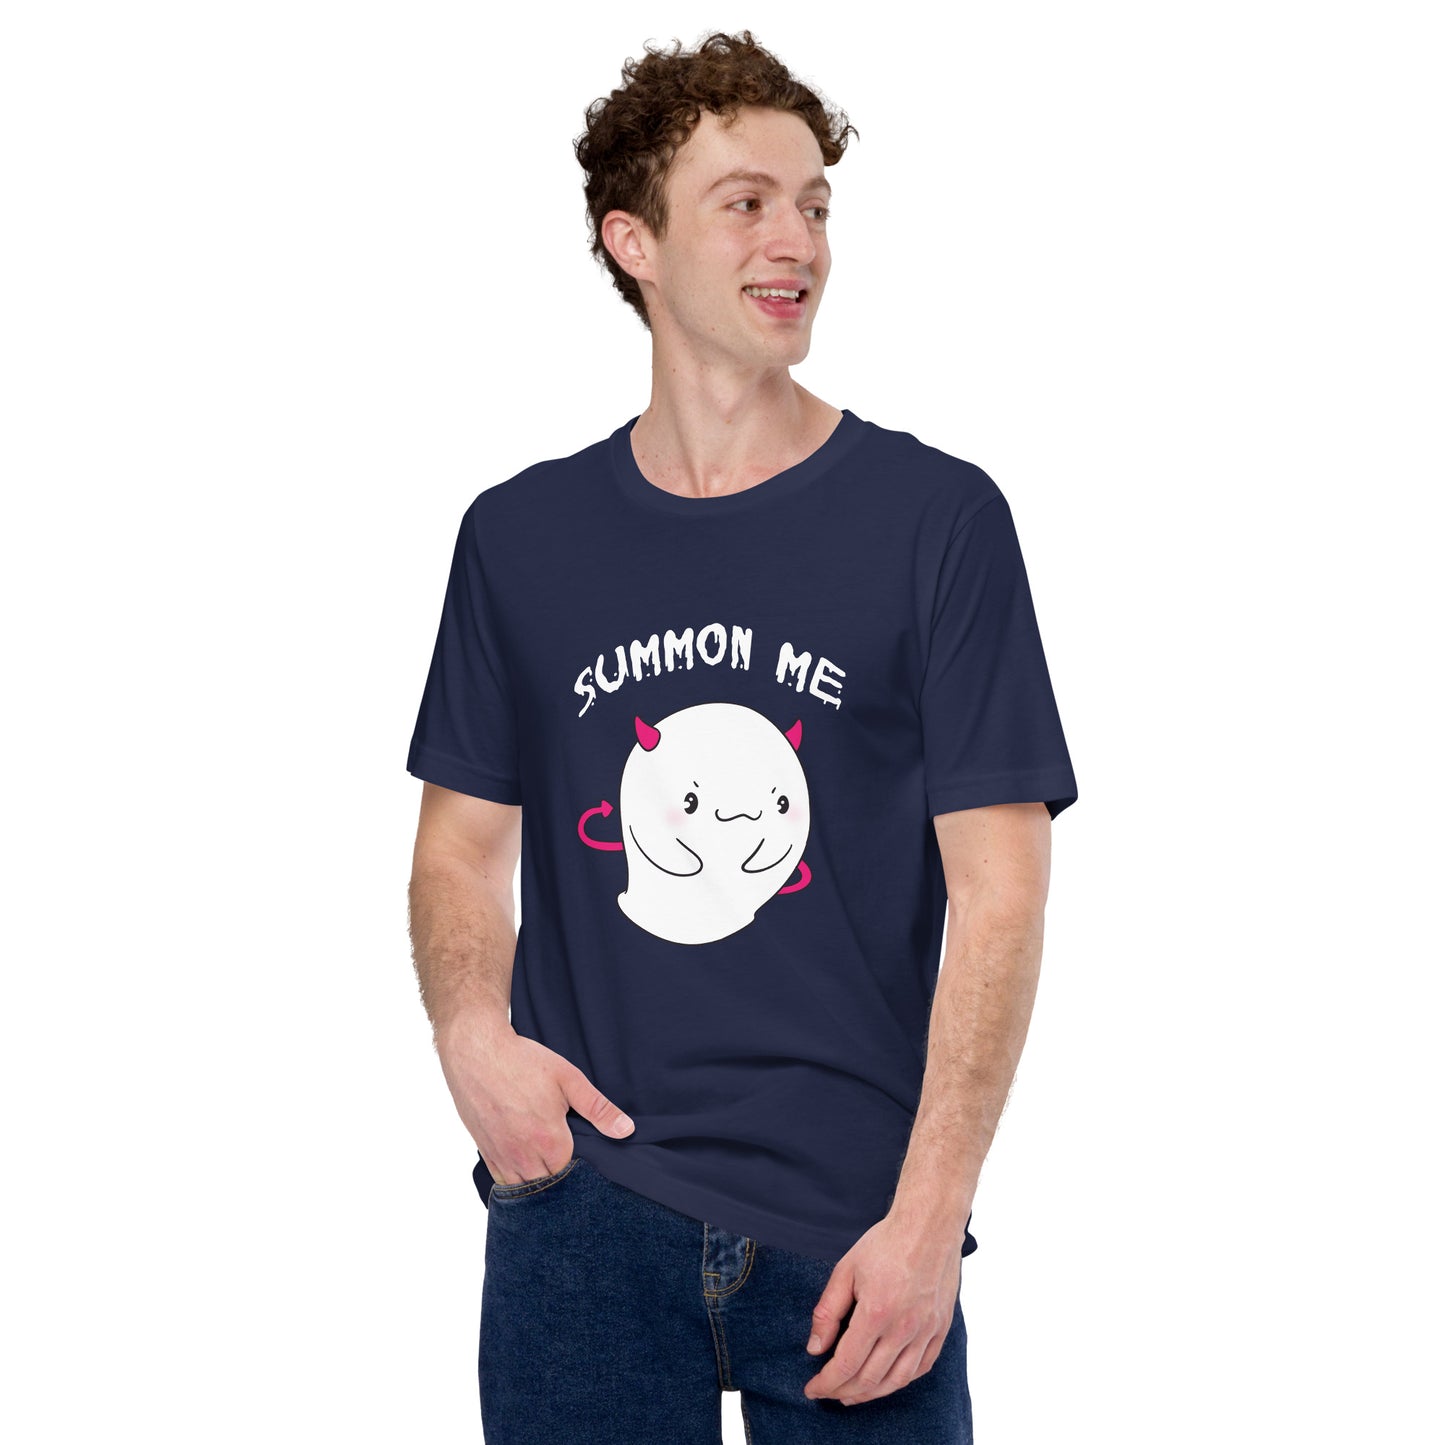 Summon me - Unisex t-shirt